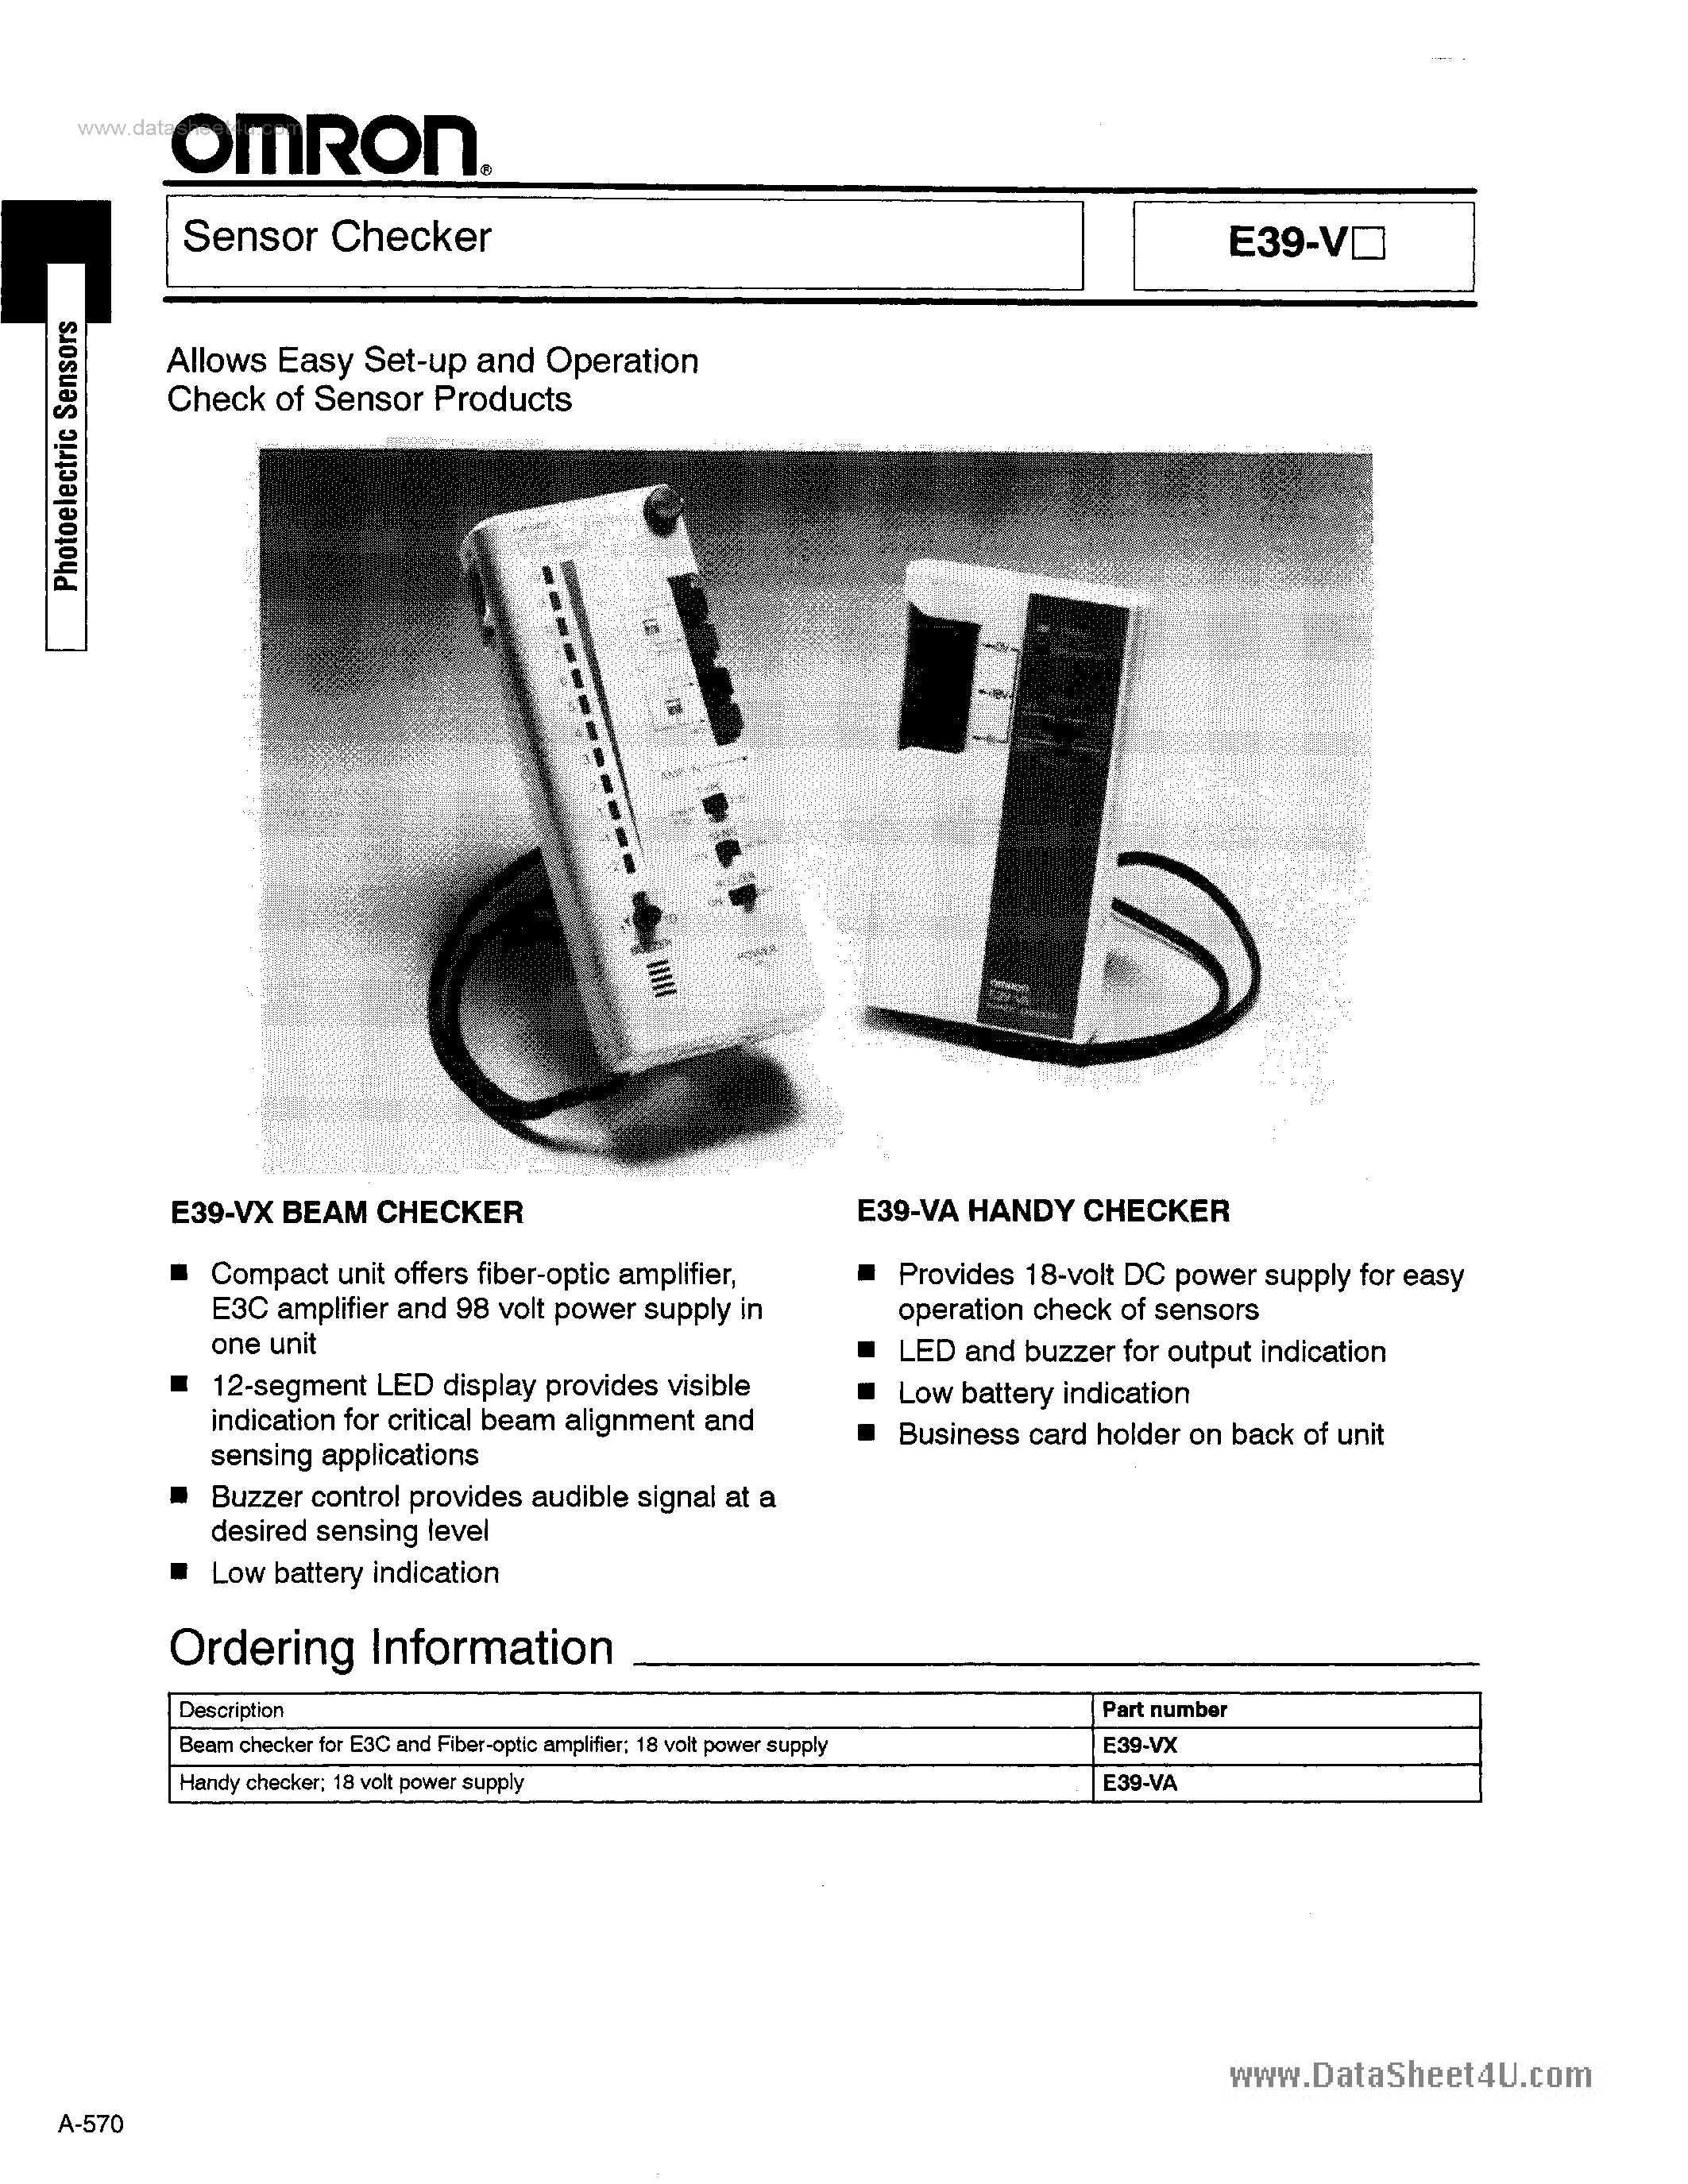 Datasheet E39-V - Sensor Checker page 1